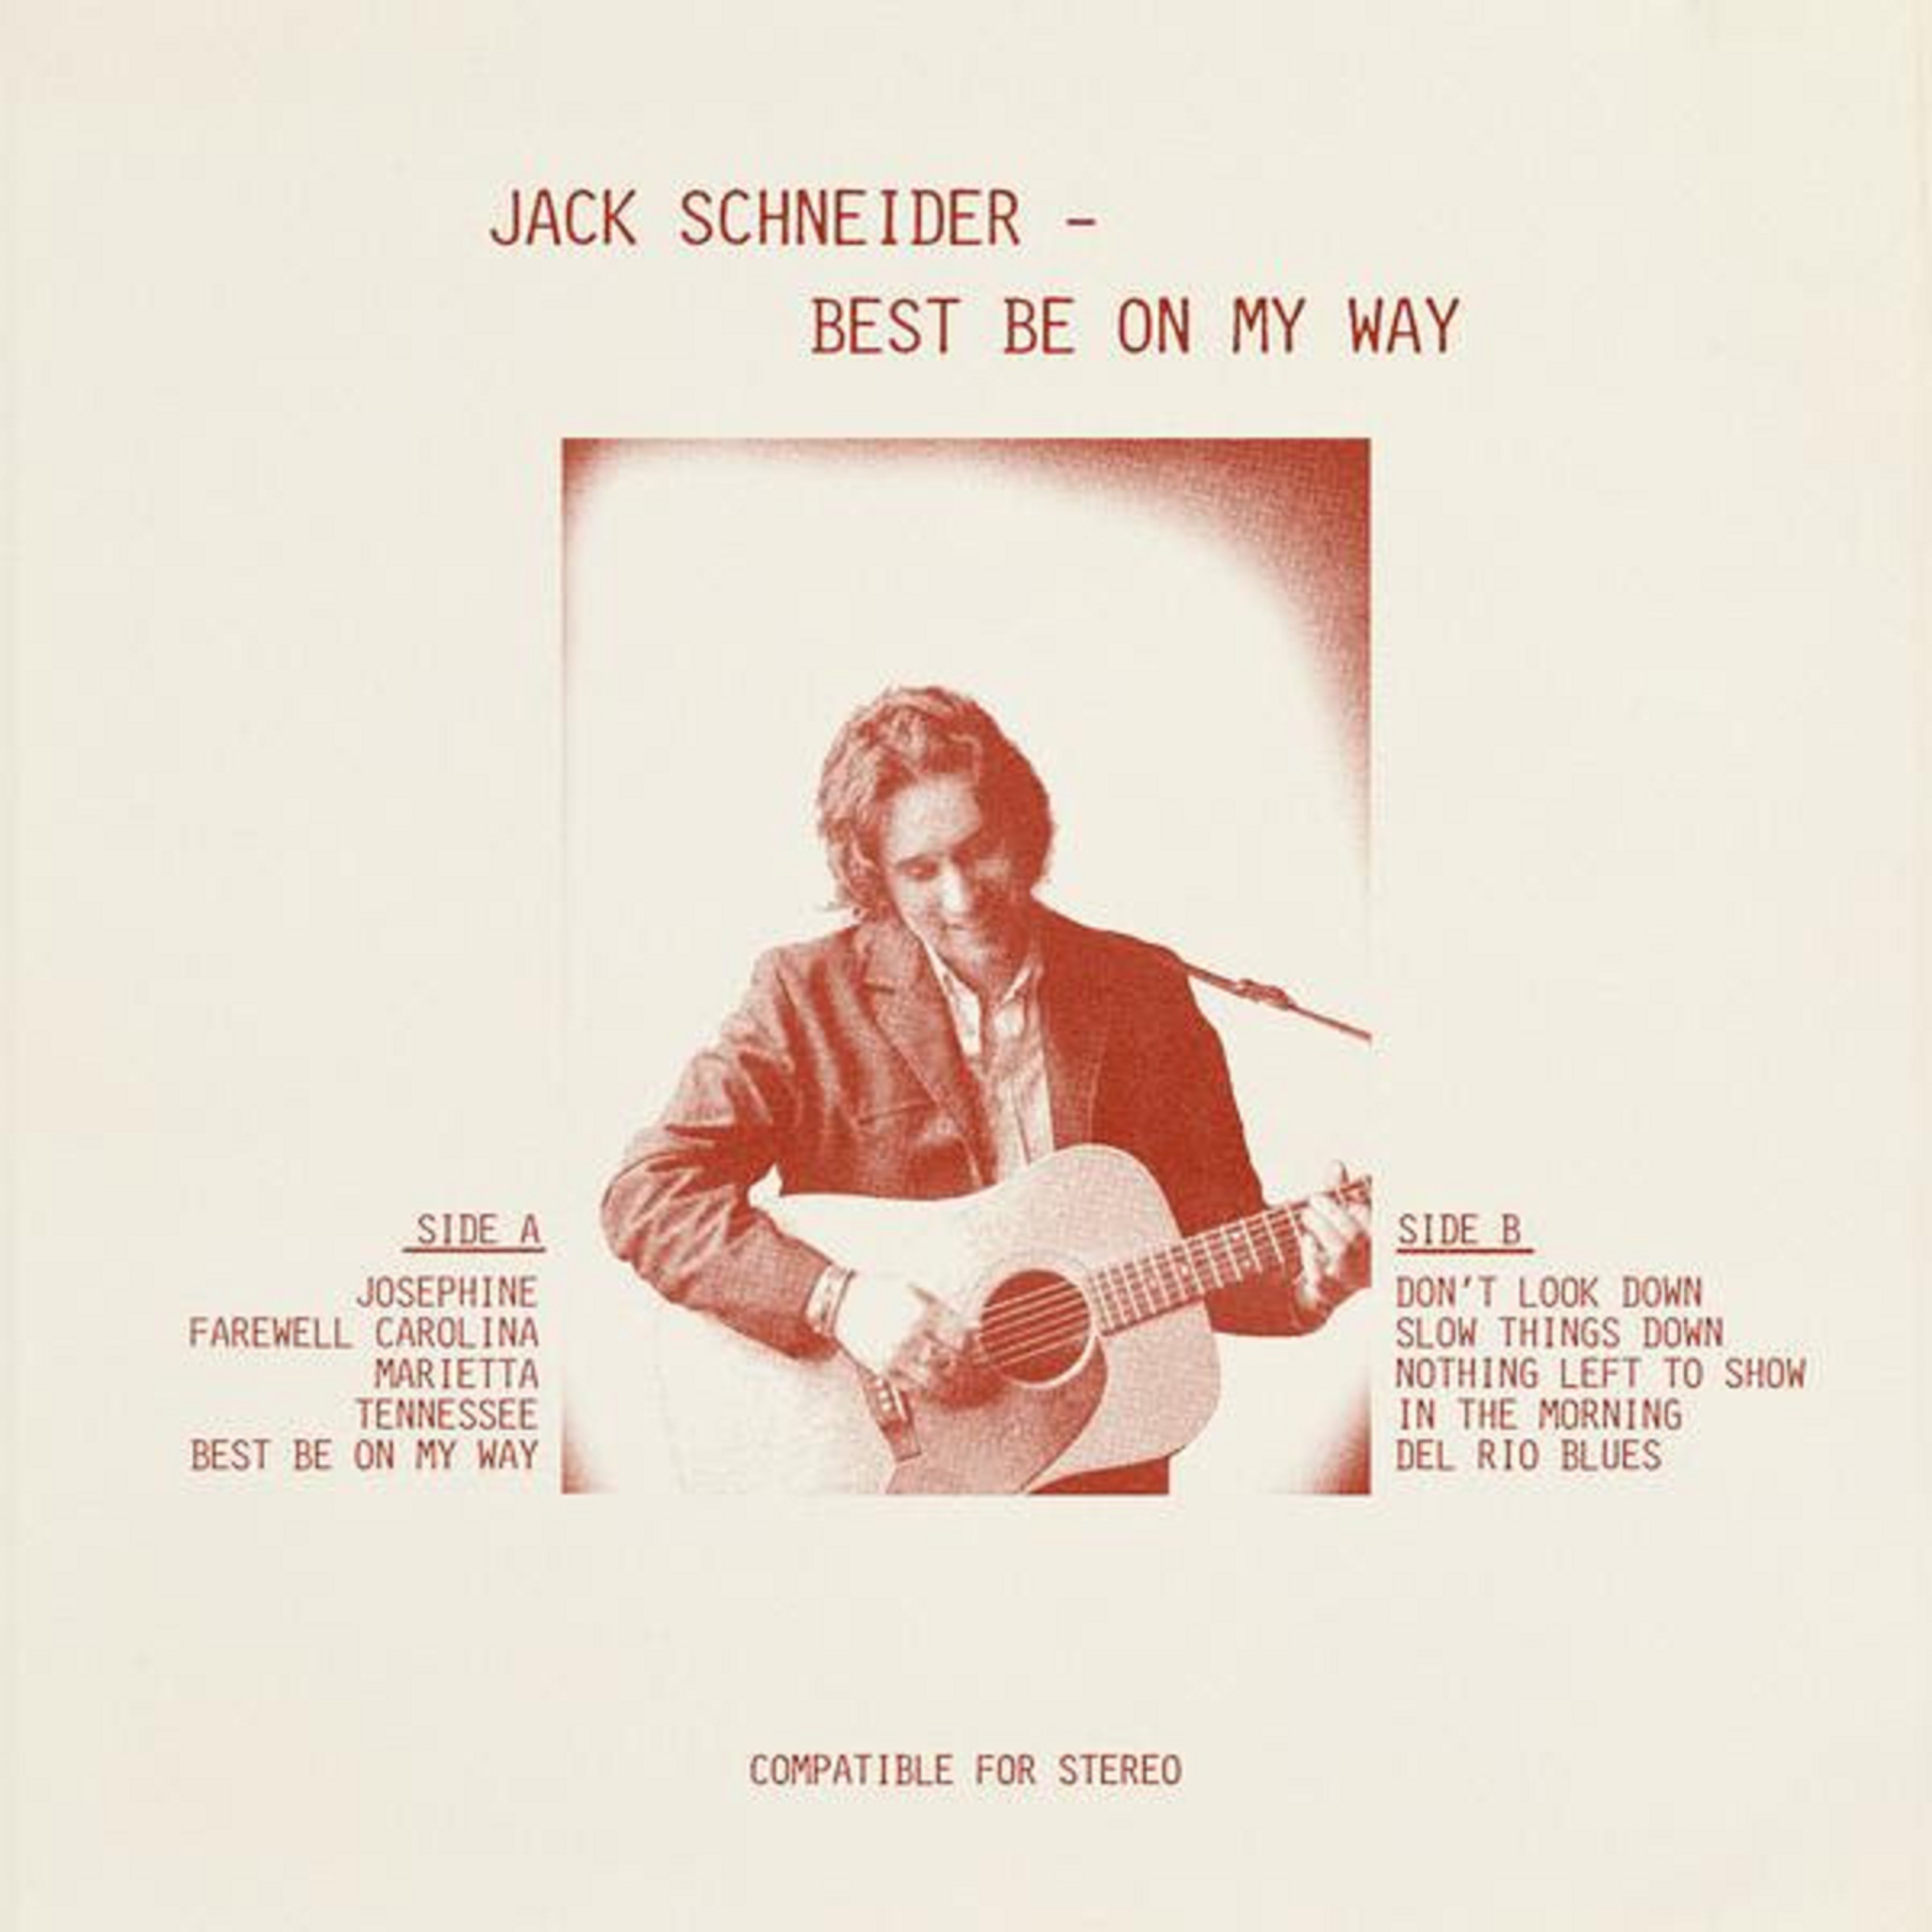 Jack Schneider Announces Debut Album With First Track, “Josephine”